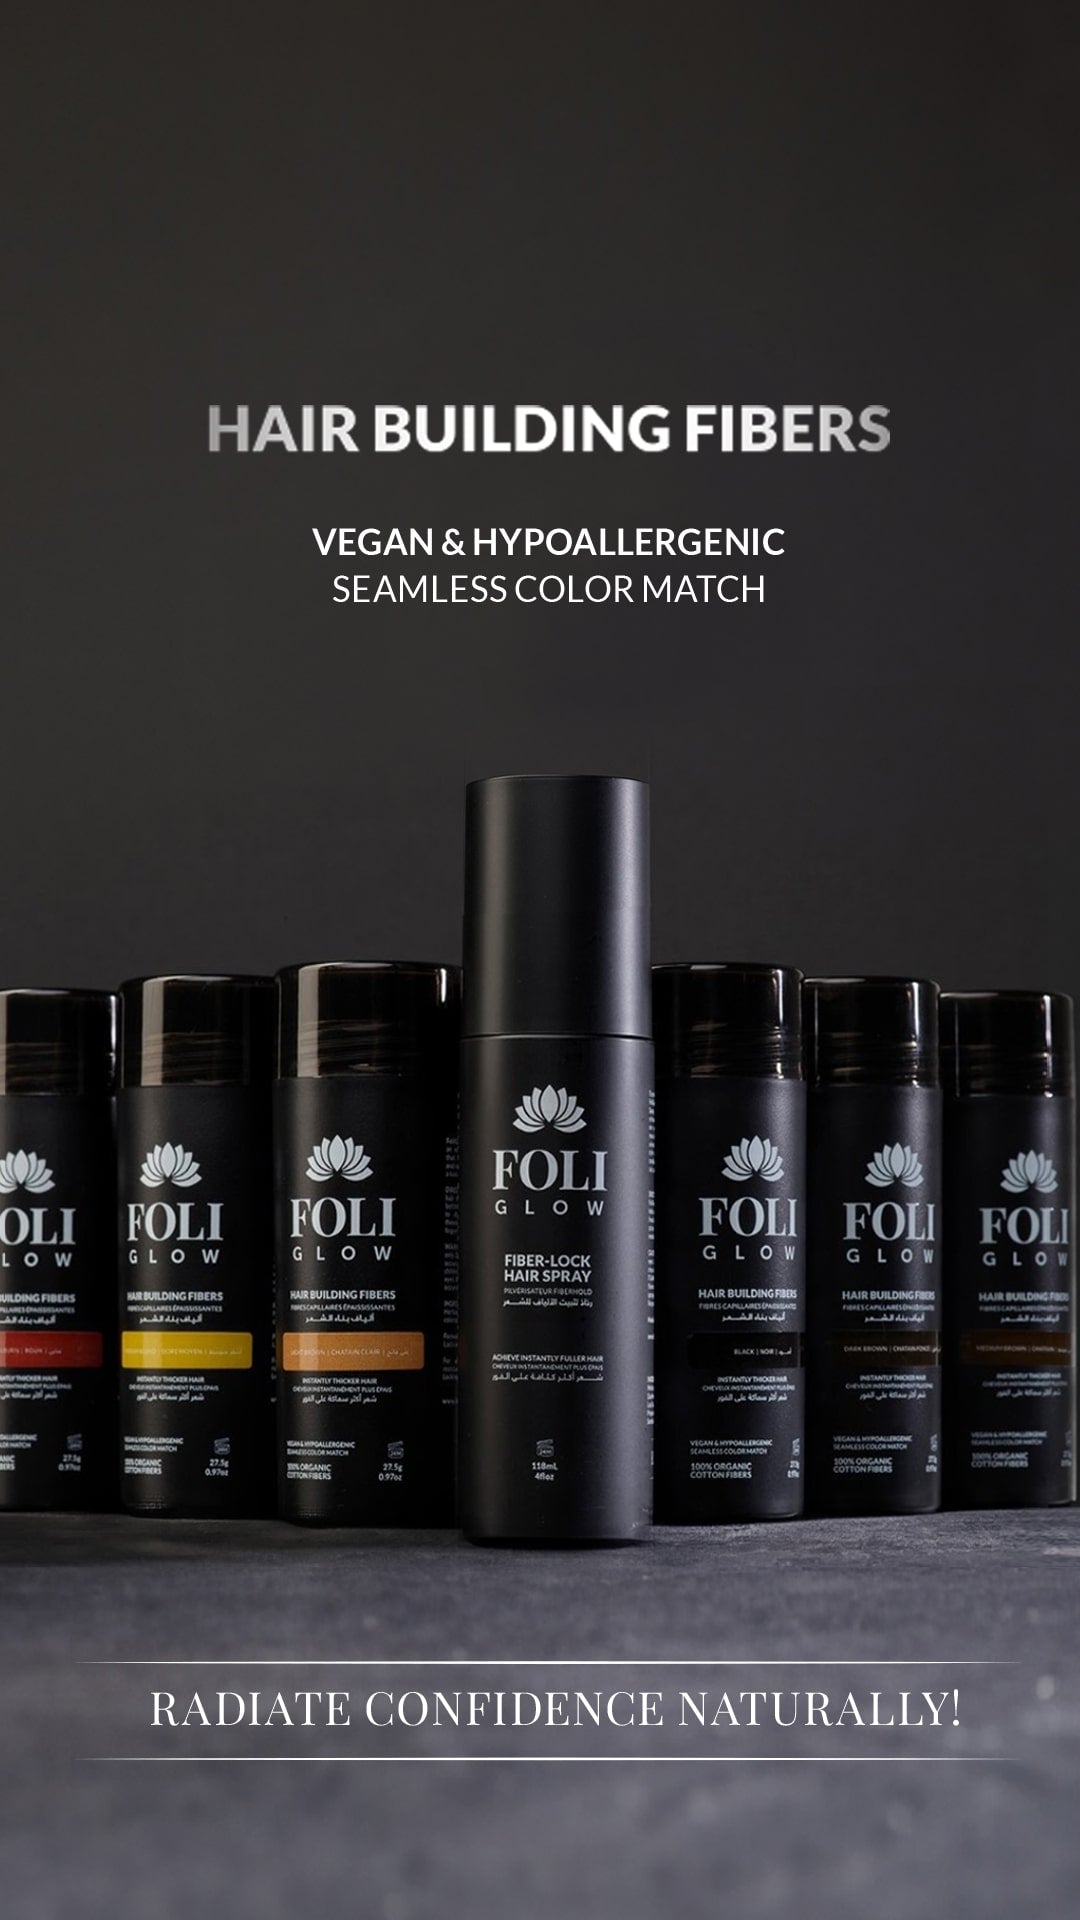 Foliglow hair building fiber fiber technology cotton powder 